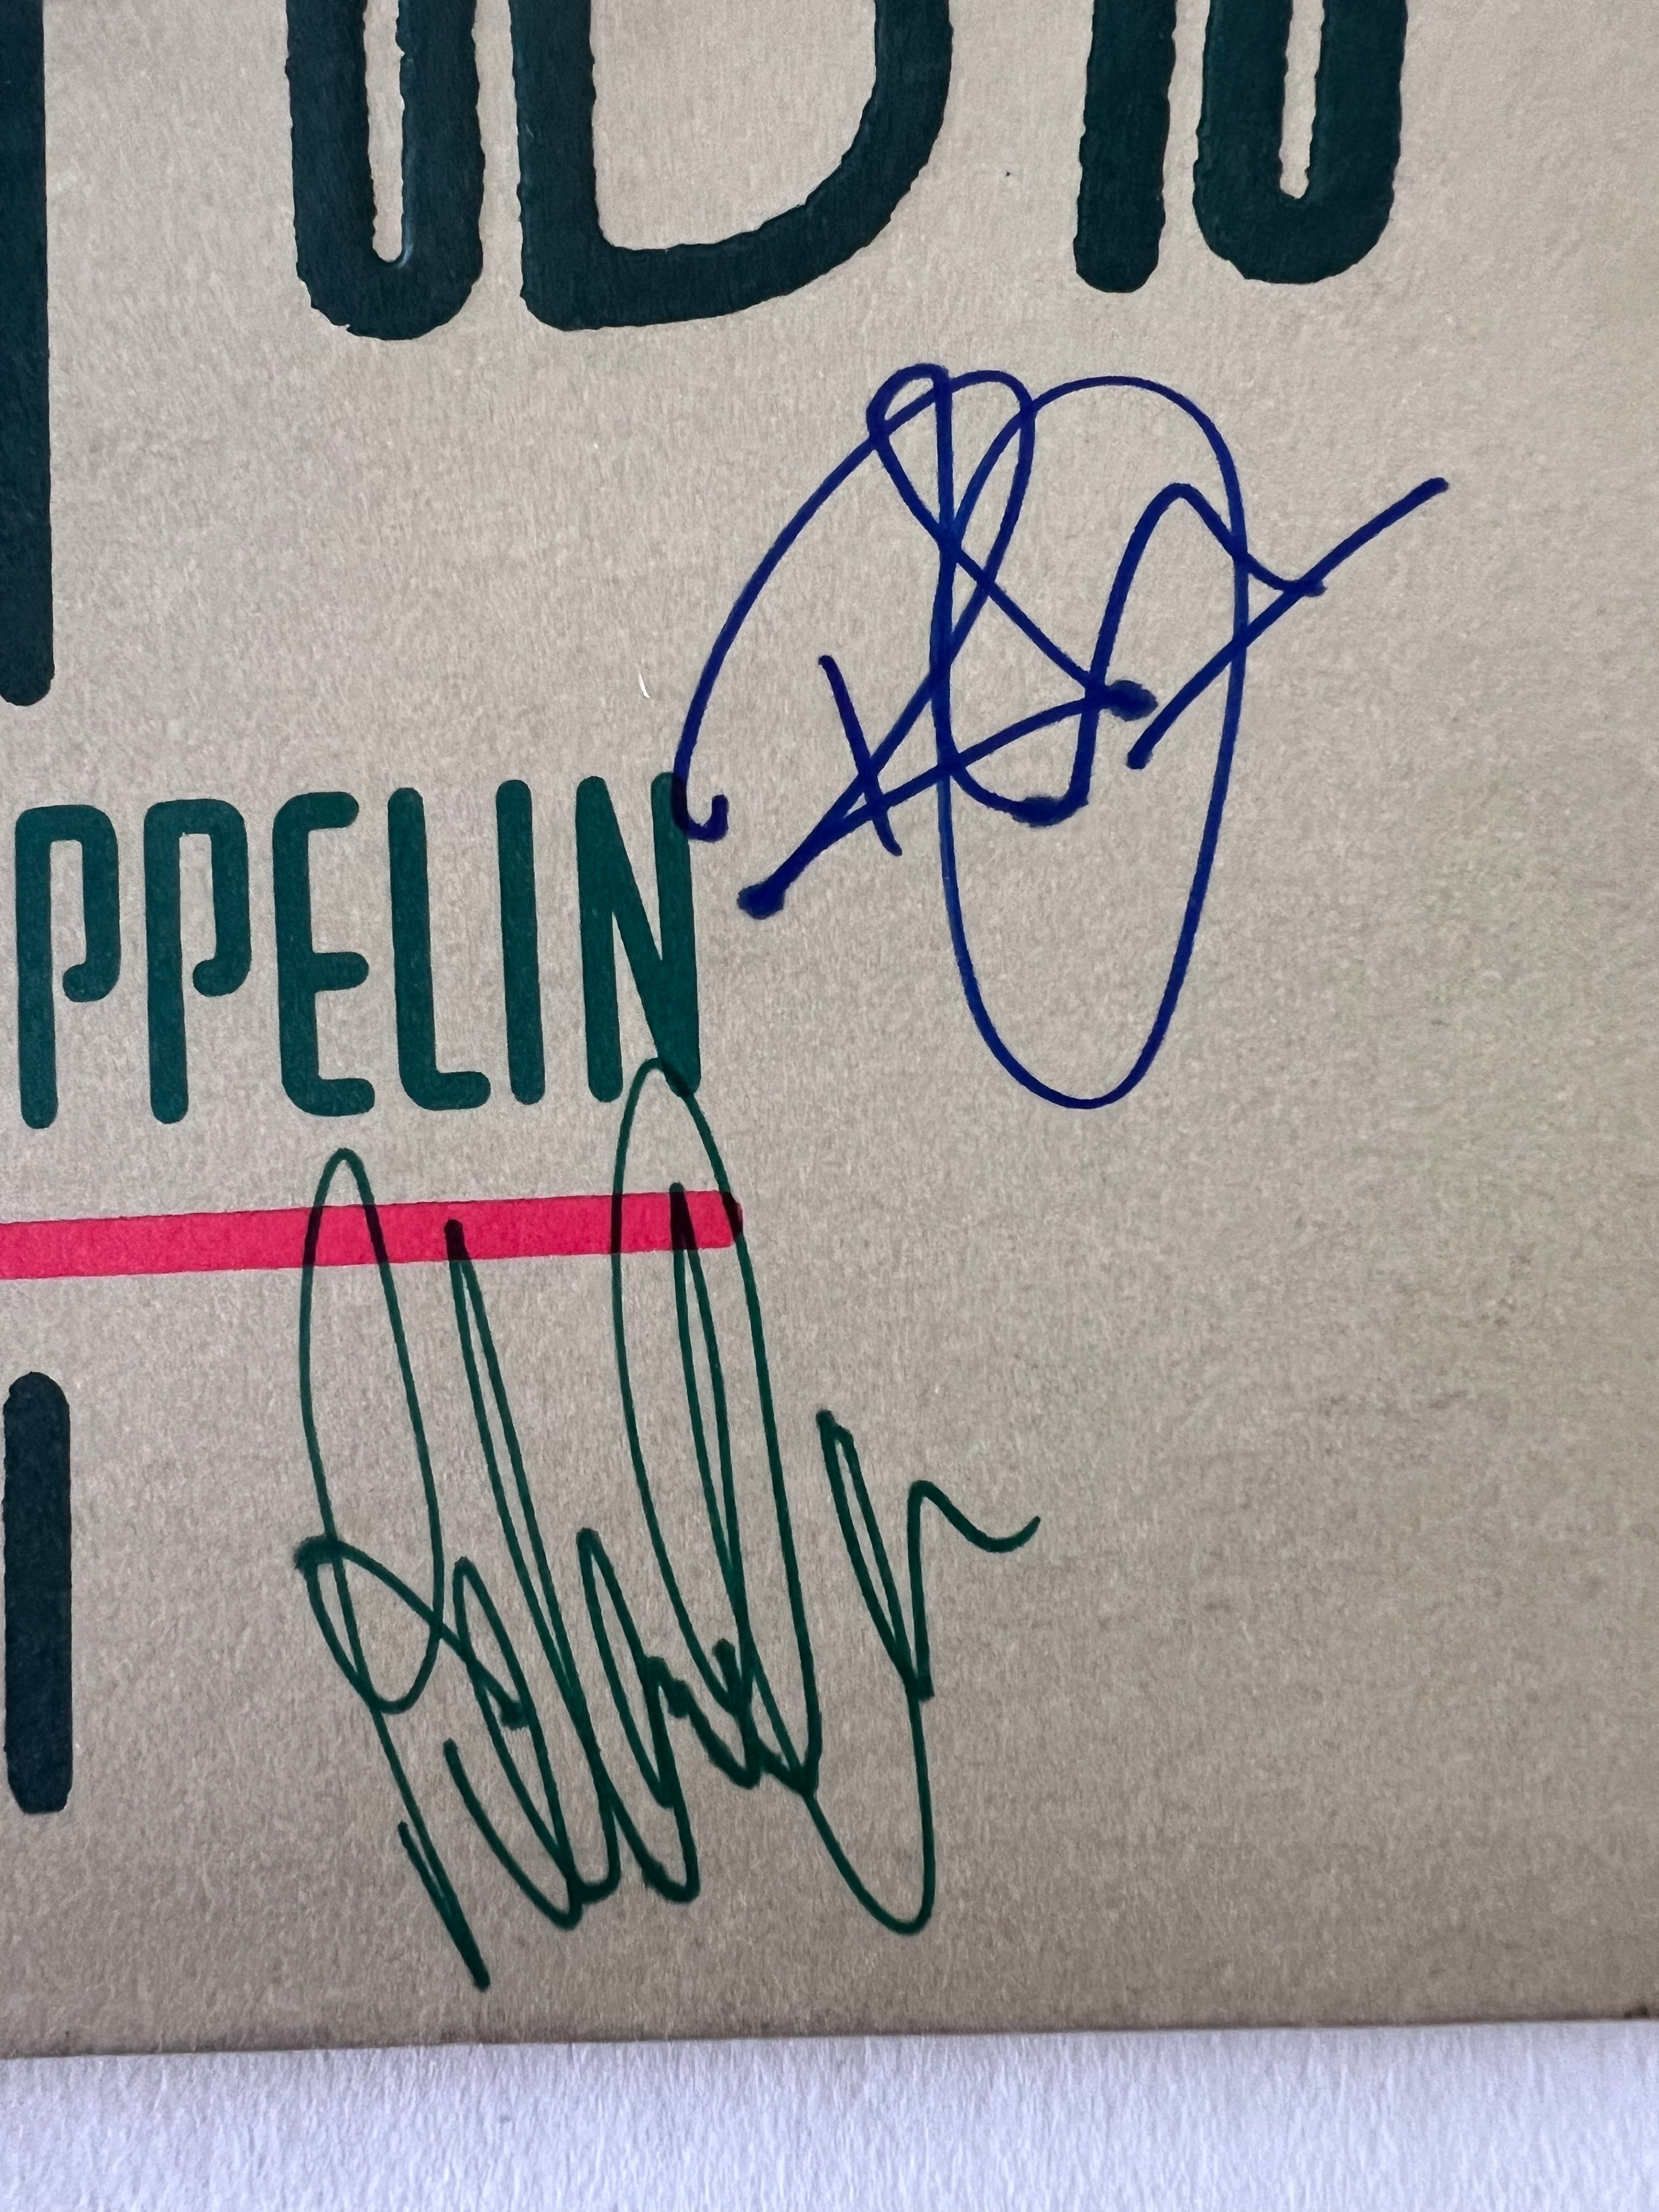 Led Zeppelin Jimmy Page Robert Plant John Paul Jones "Coda" original vinyl Lp signed with proof